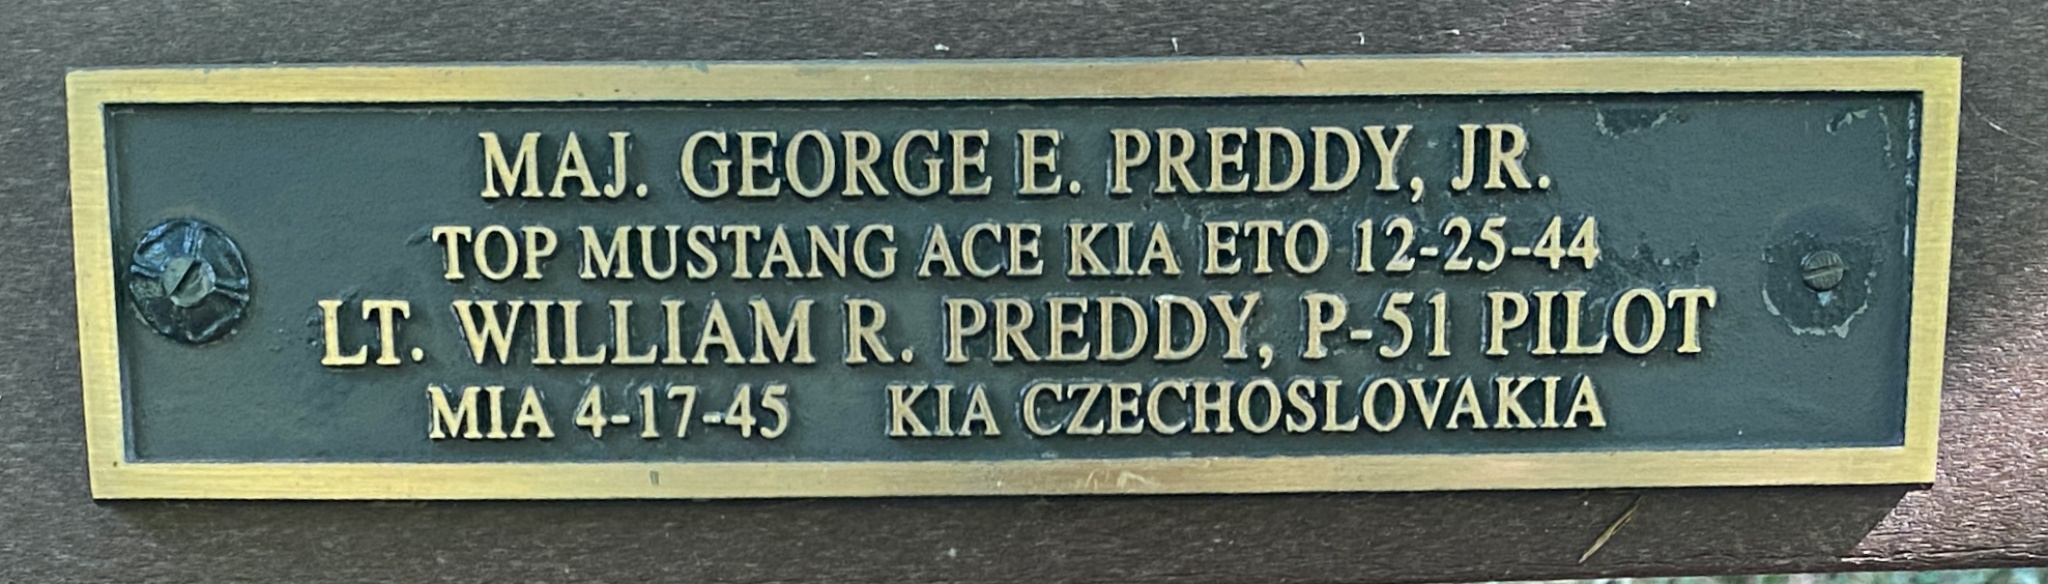 MAJ. GEORGE E. PREDDY, JR. TOP MUSTANG ACE KIA ETO 12-25-44 LT. WILLIAM R. PREDDY, P-51 PILOT MIA 4-17-45    KIA CZECHOSLAVAKIA